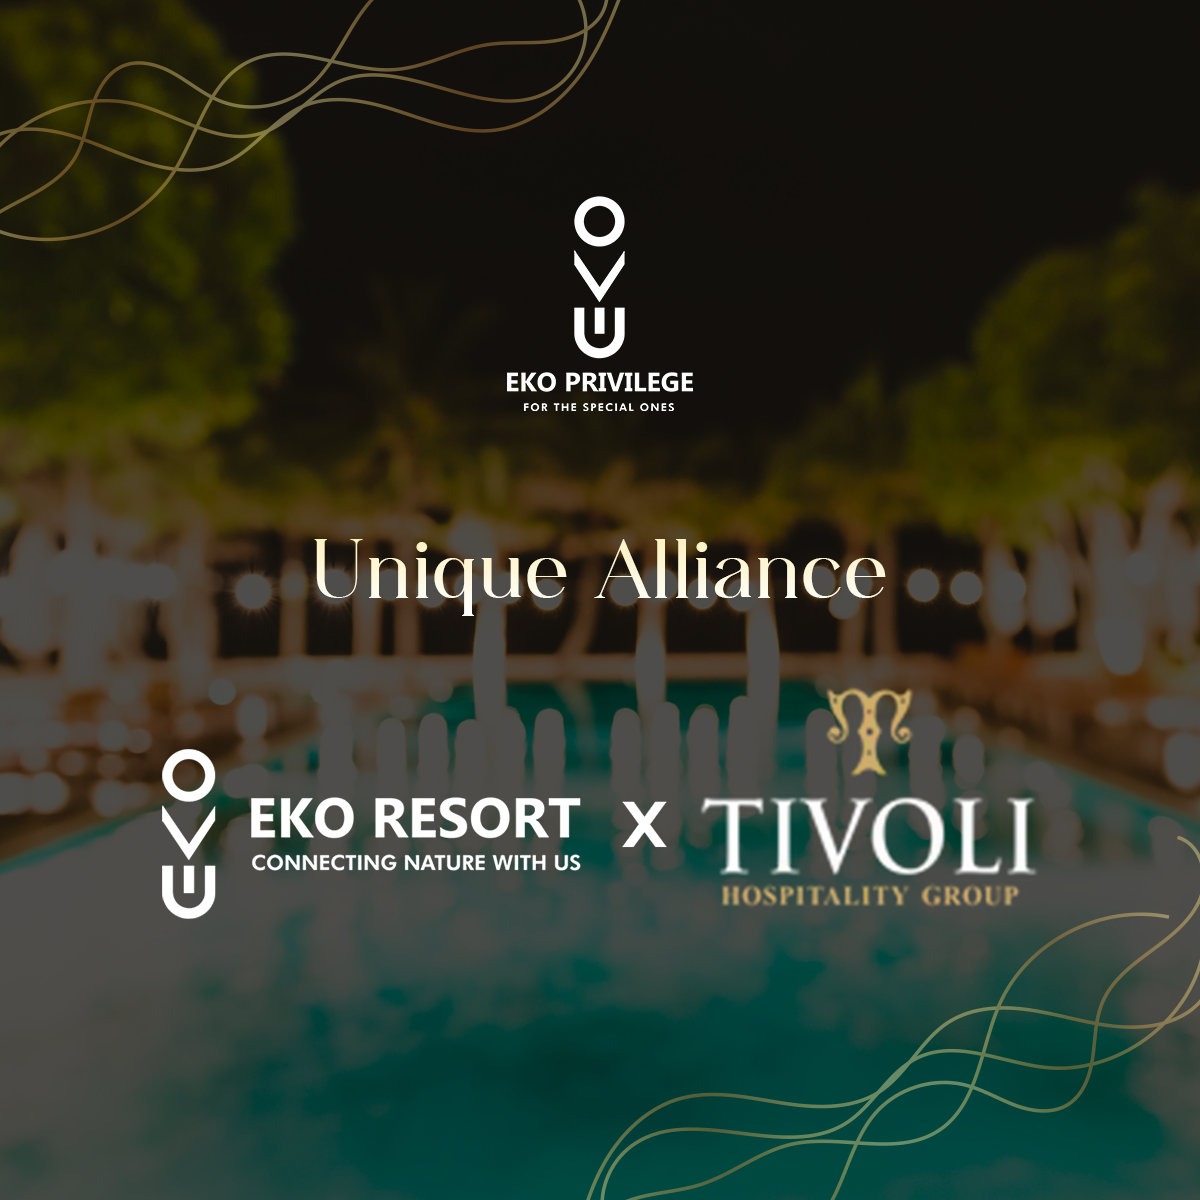 eko resort and tivoli alliance